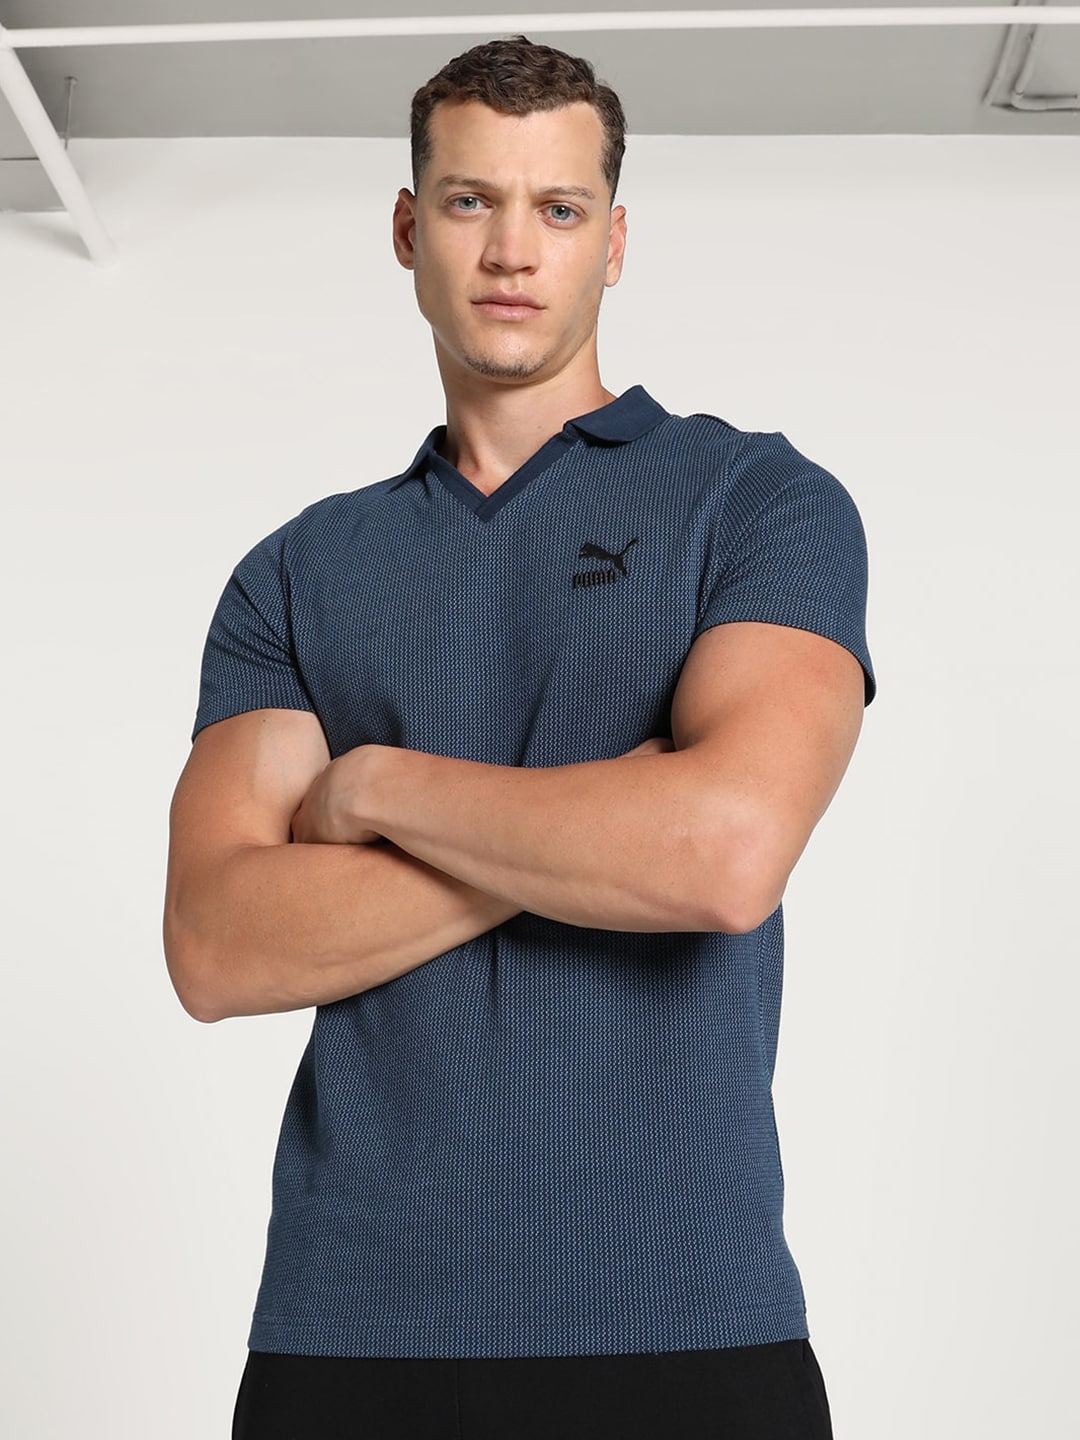 Puma Classics Jacquard Cotton Slim-Fit Polo T-Shirt